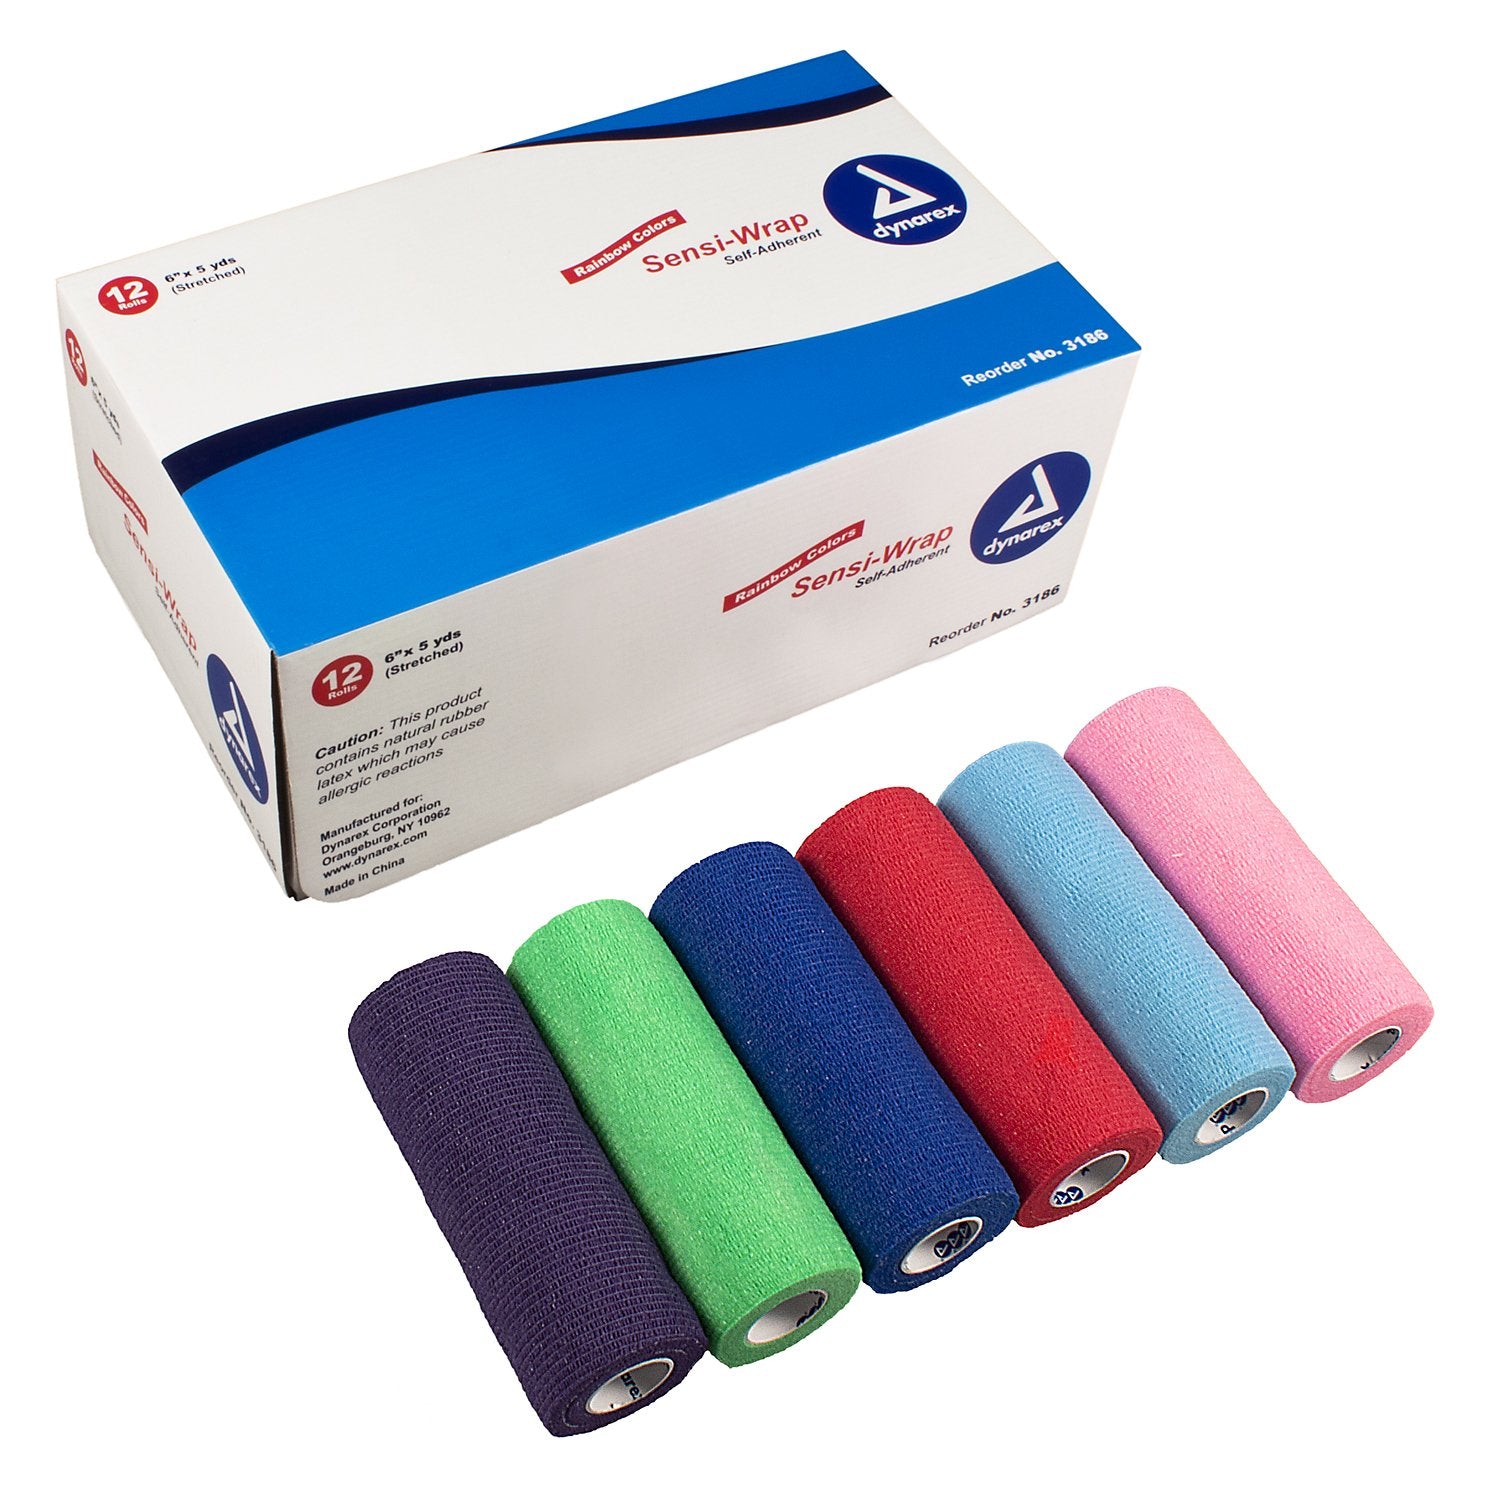 Cohesive Bandage Sensi-Wrap 6 Inch X 5 Yard Self-Adherent Closure Red / Green / Purple / Dark Blue / Pink / Light Blue NonSterile Standard Compression